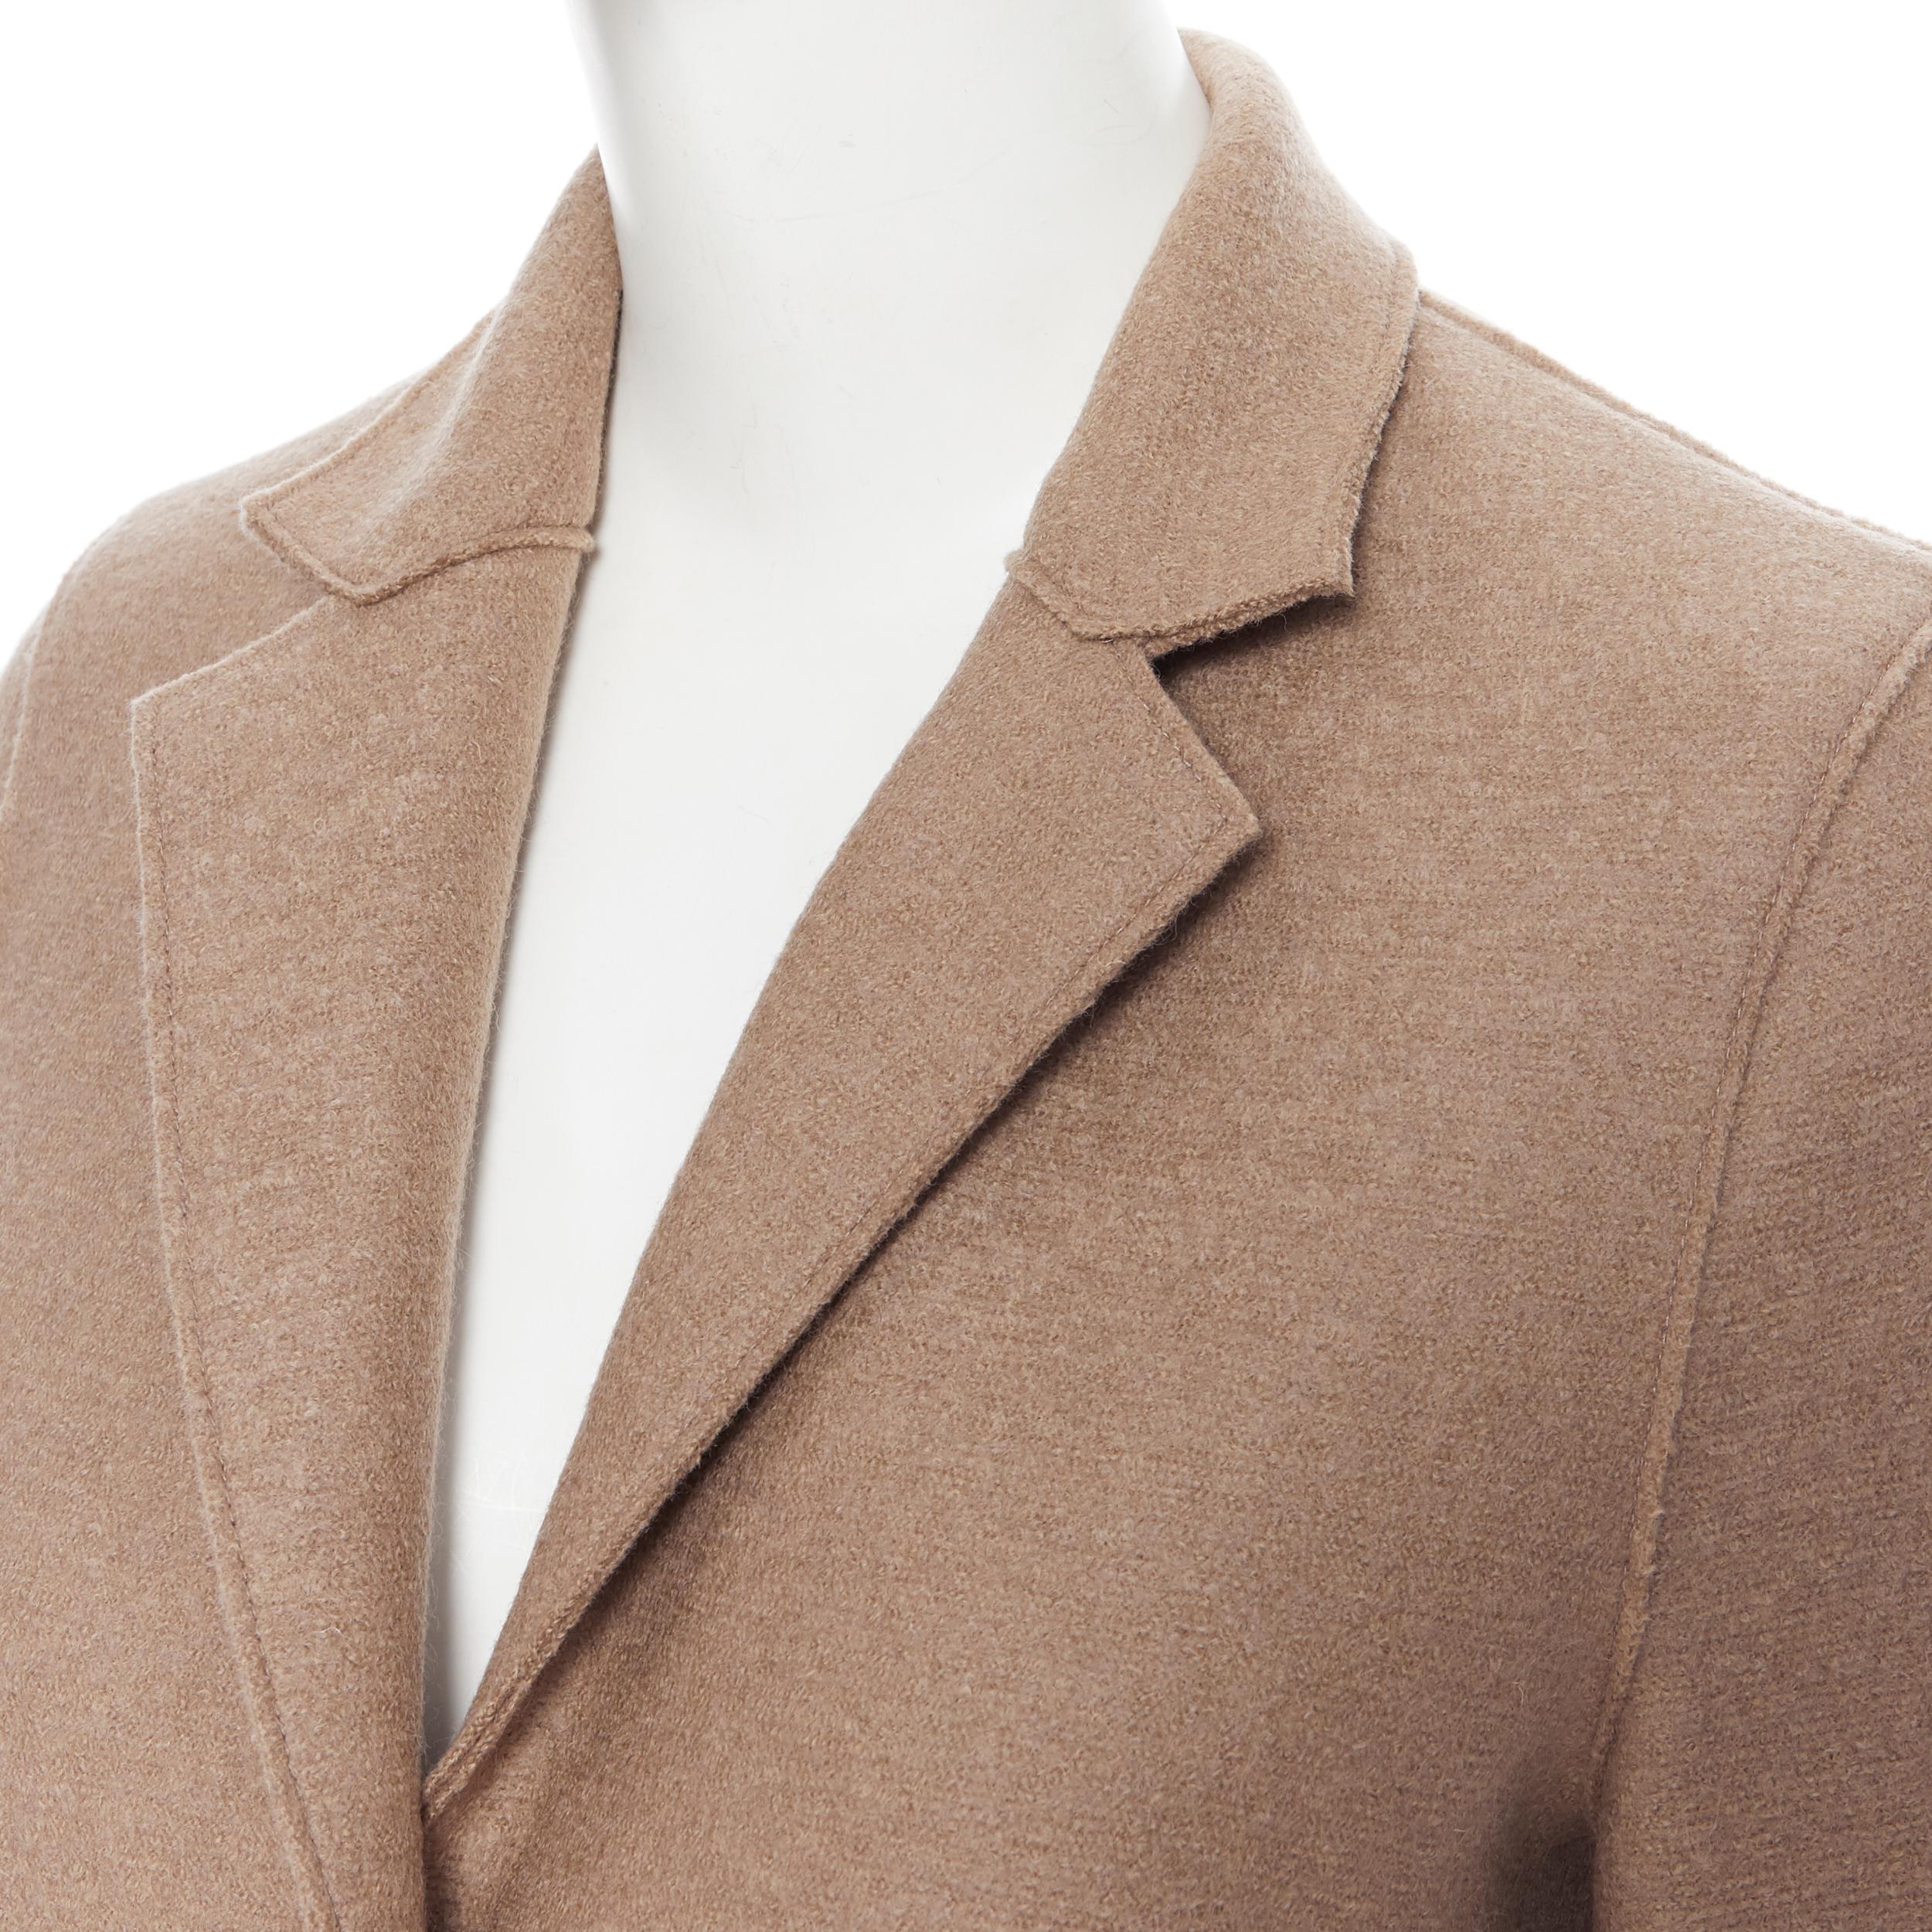 HARRIS WHARF LONDON 100% virgin wool taupe brown MLK long coat IT38 XS
Brand: Harris Wharf
Designer: Harris Wharf
Model Name / Style: Wool coat
Material: Wool
Color: Brown
Pattern: Solid
Closure: Snap
Extra Detail: Notched collar. Concealed snap